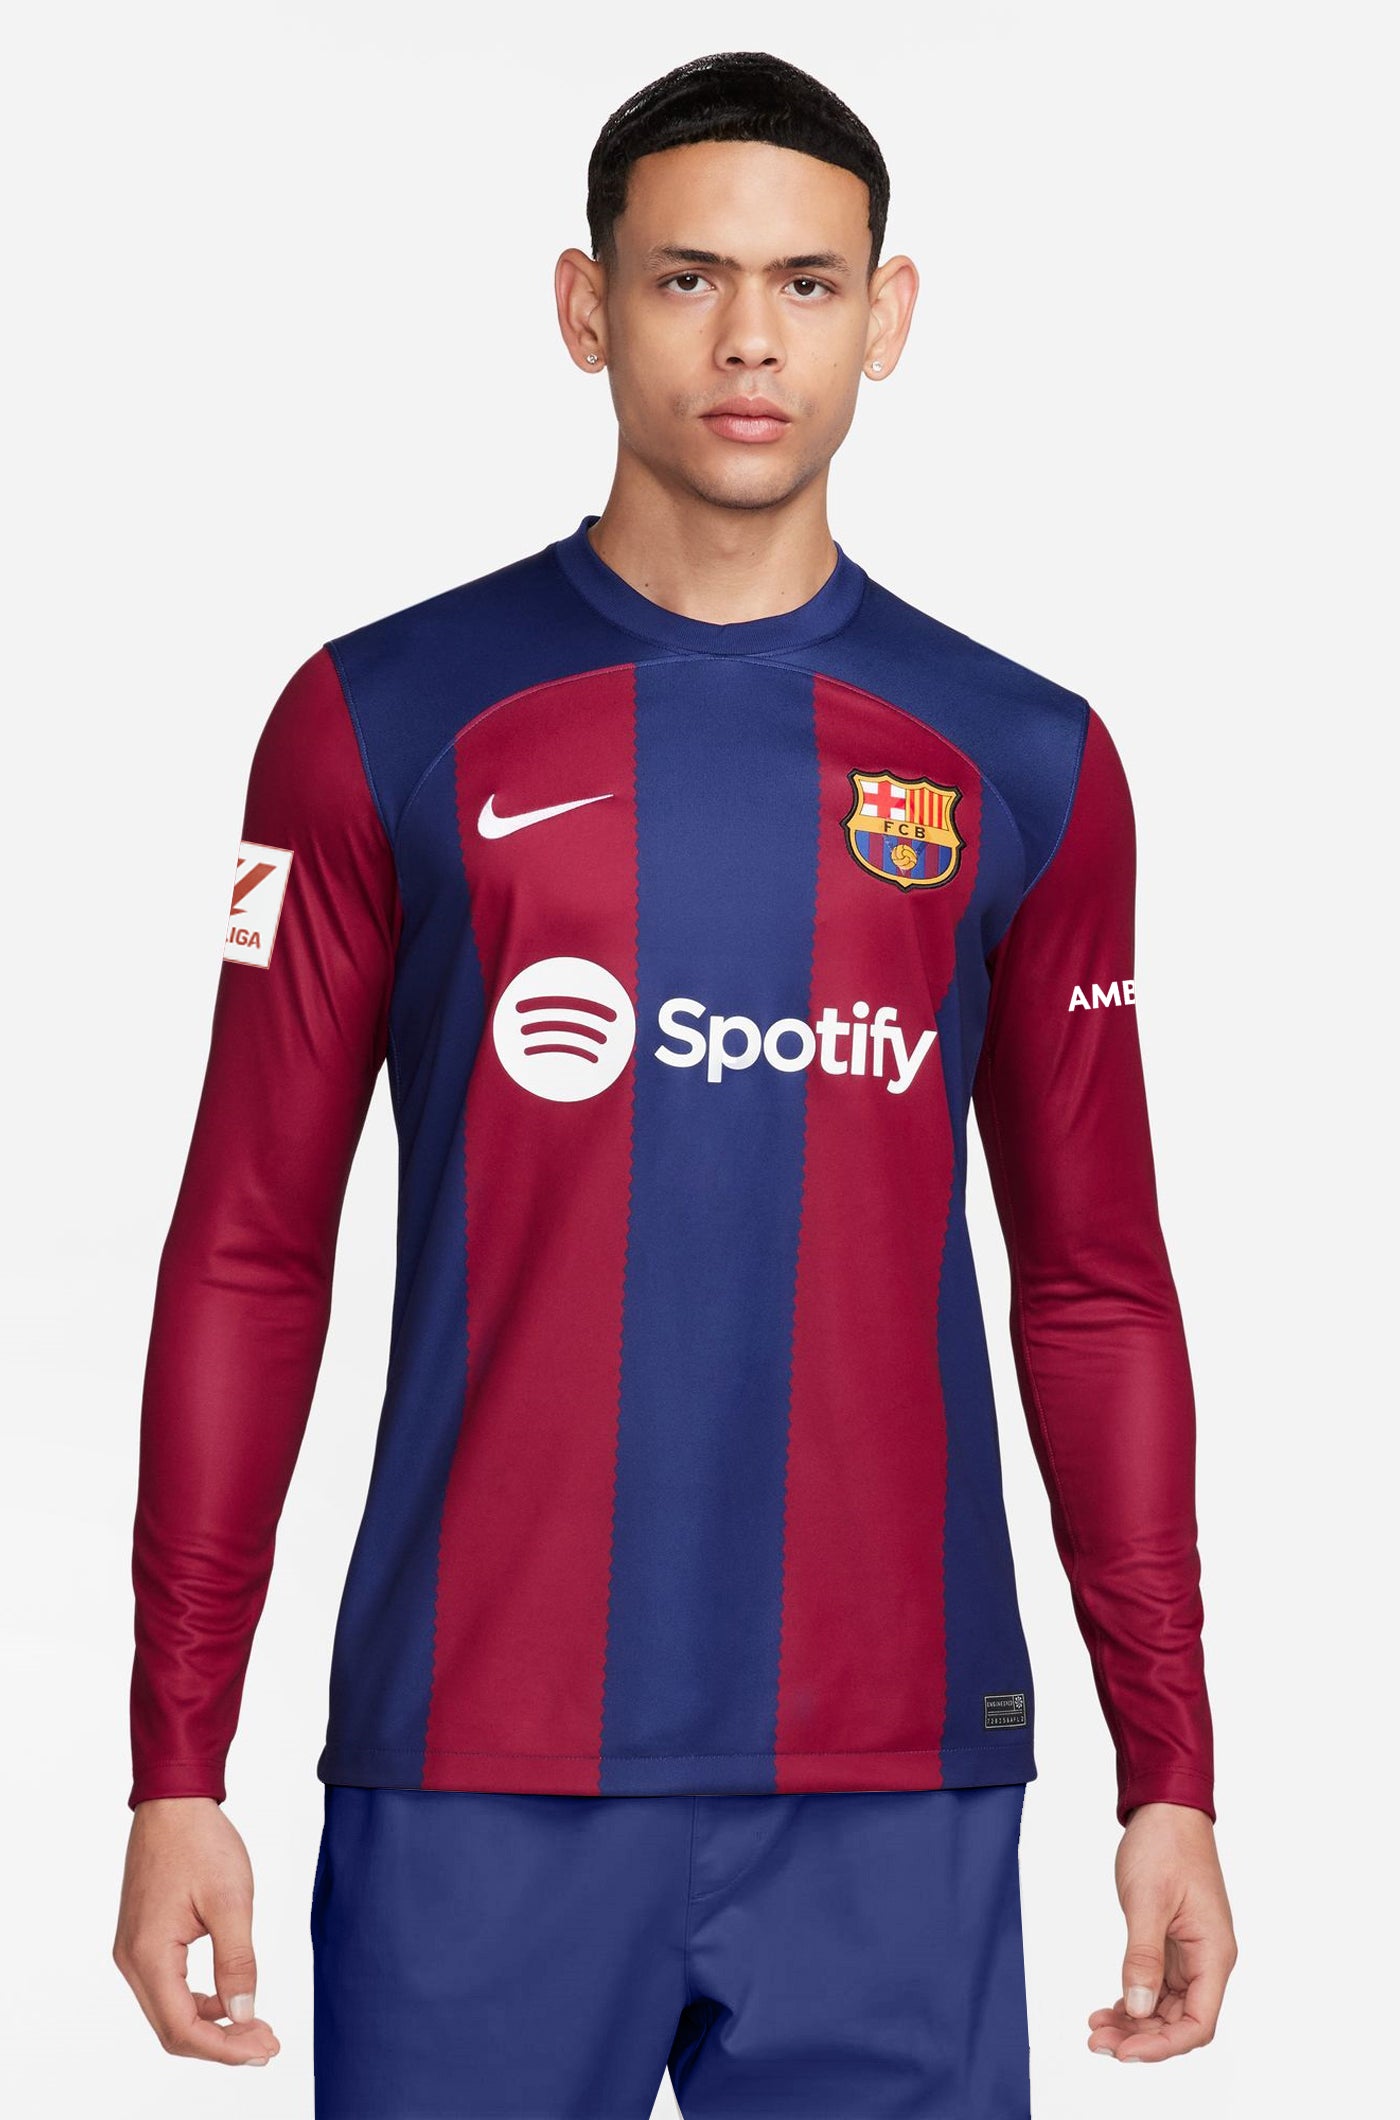 LFP FC Barcelona home shirt 23/24 - Long-sleeve - FERMÍN